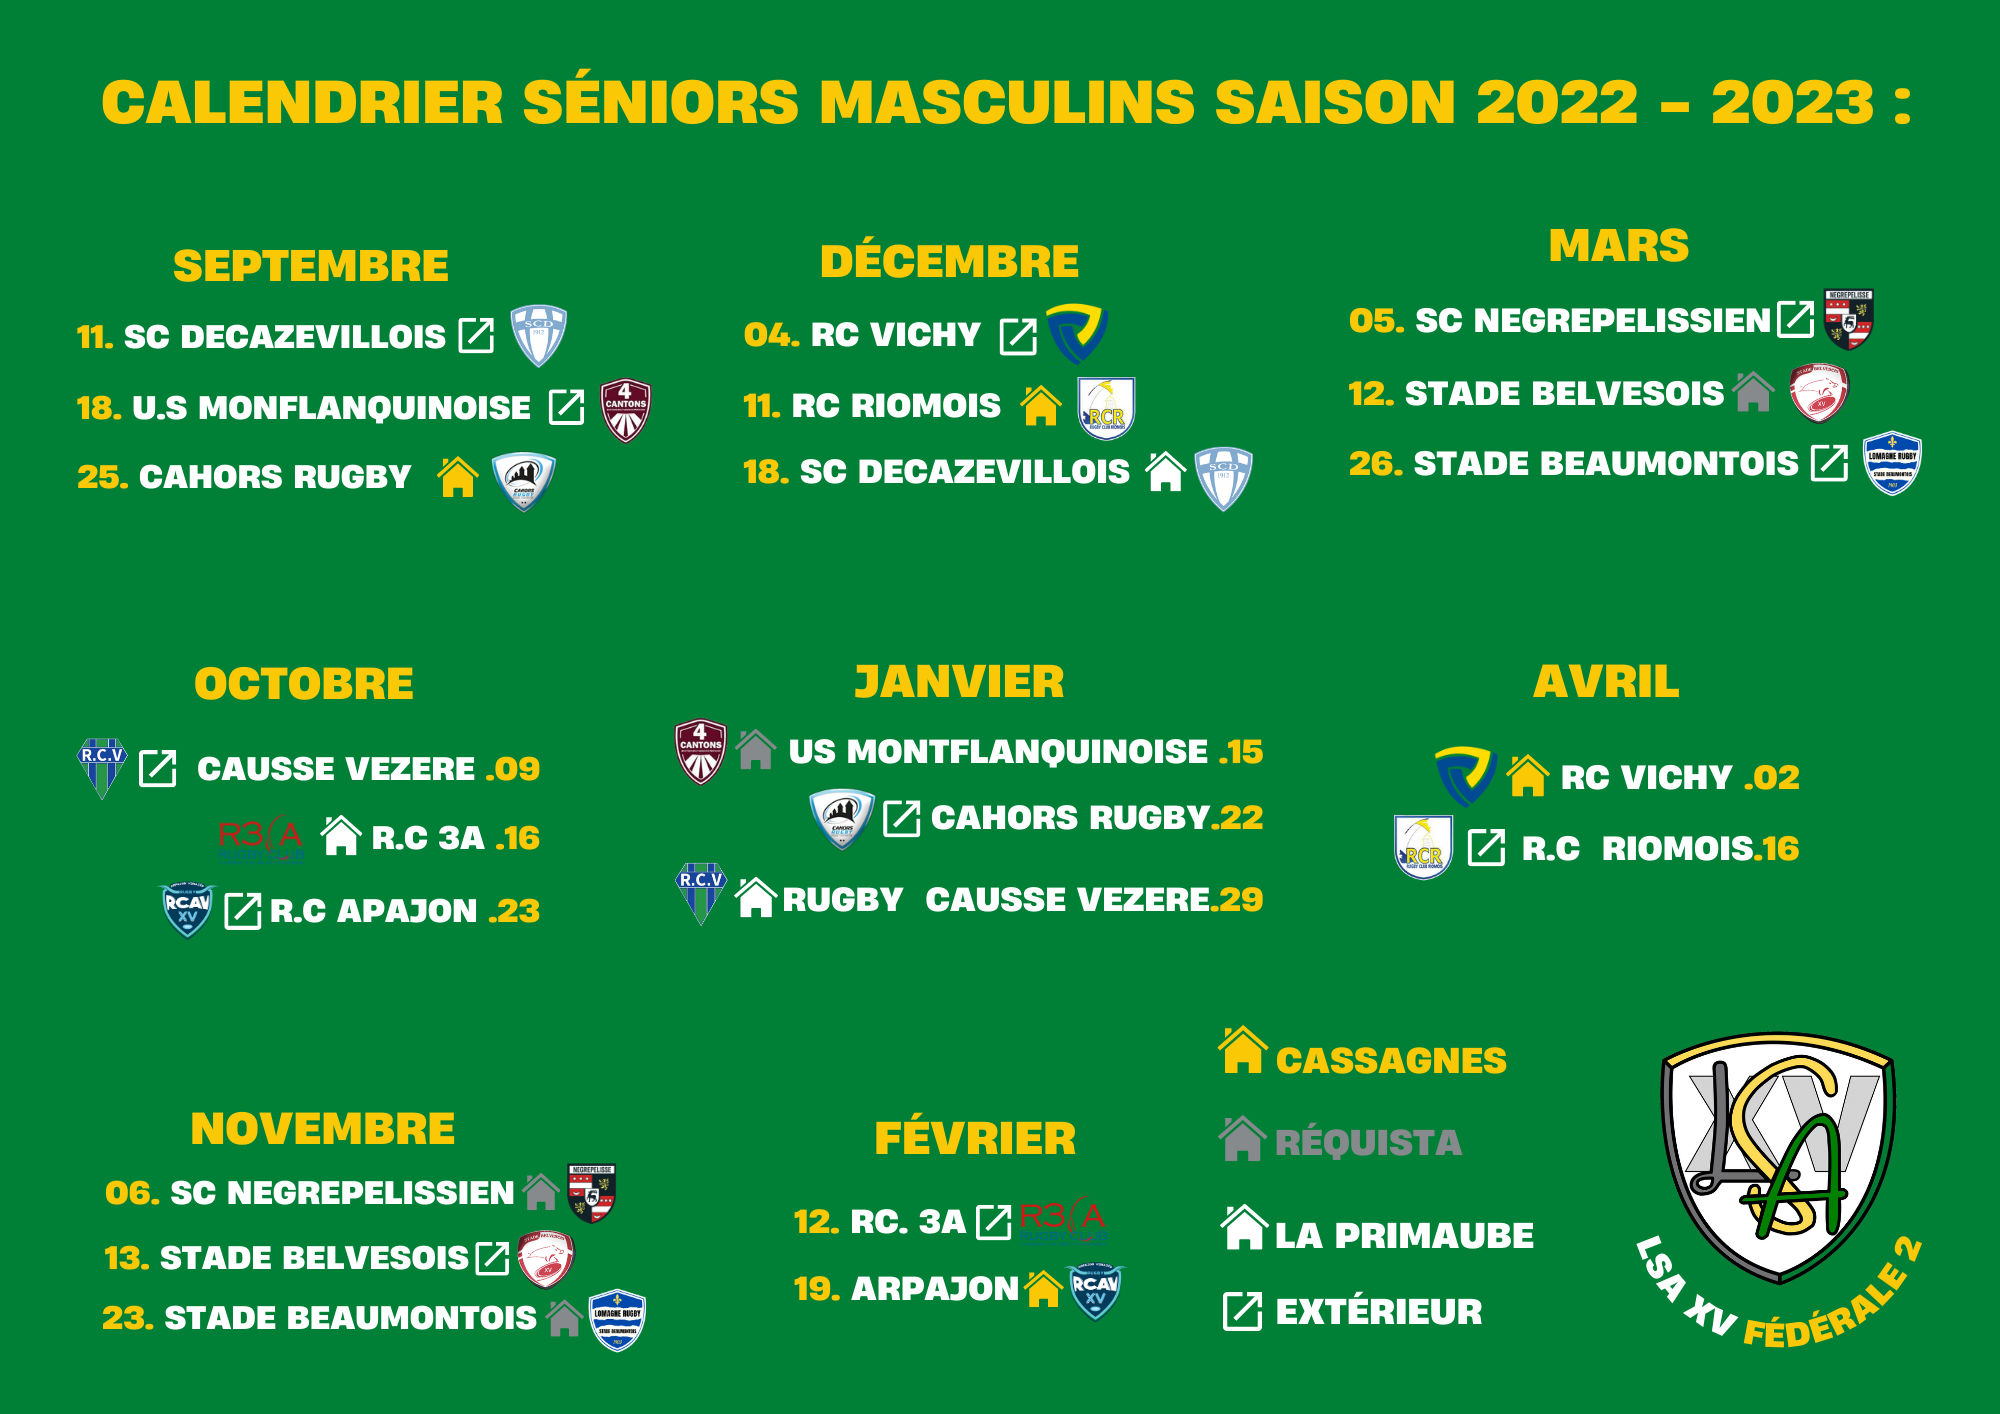 CALENDRIER SÉNIORS MASCULINS saison 2022 - 2023 (1)